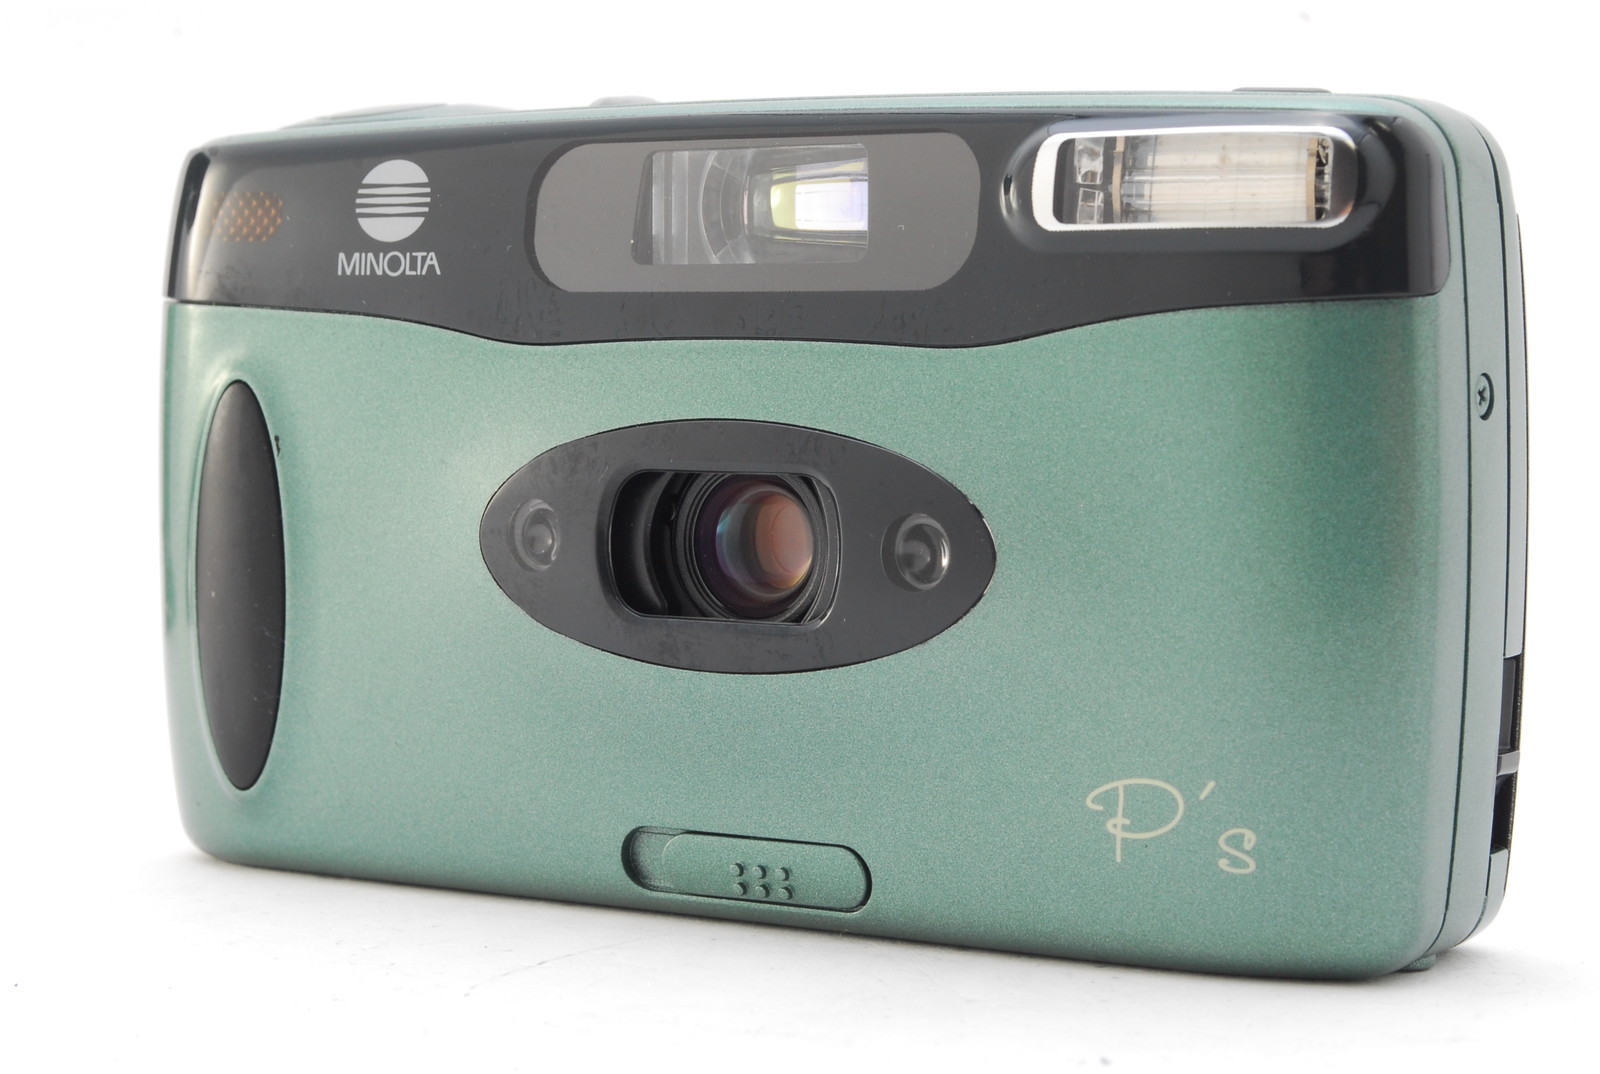 PROMOTION. NEAR MINT Minolta P’s 35mm Film Panorama Point and Shoot Camera Green Body NEAR MINT Minolta P 的 35 毫米胶片全景傻瓜相机绿色机身